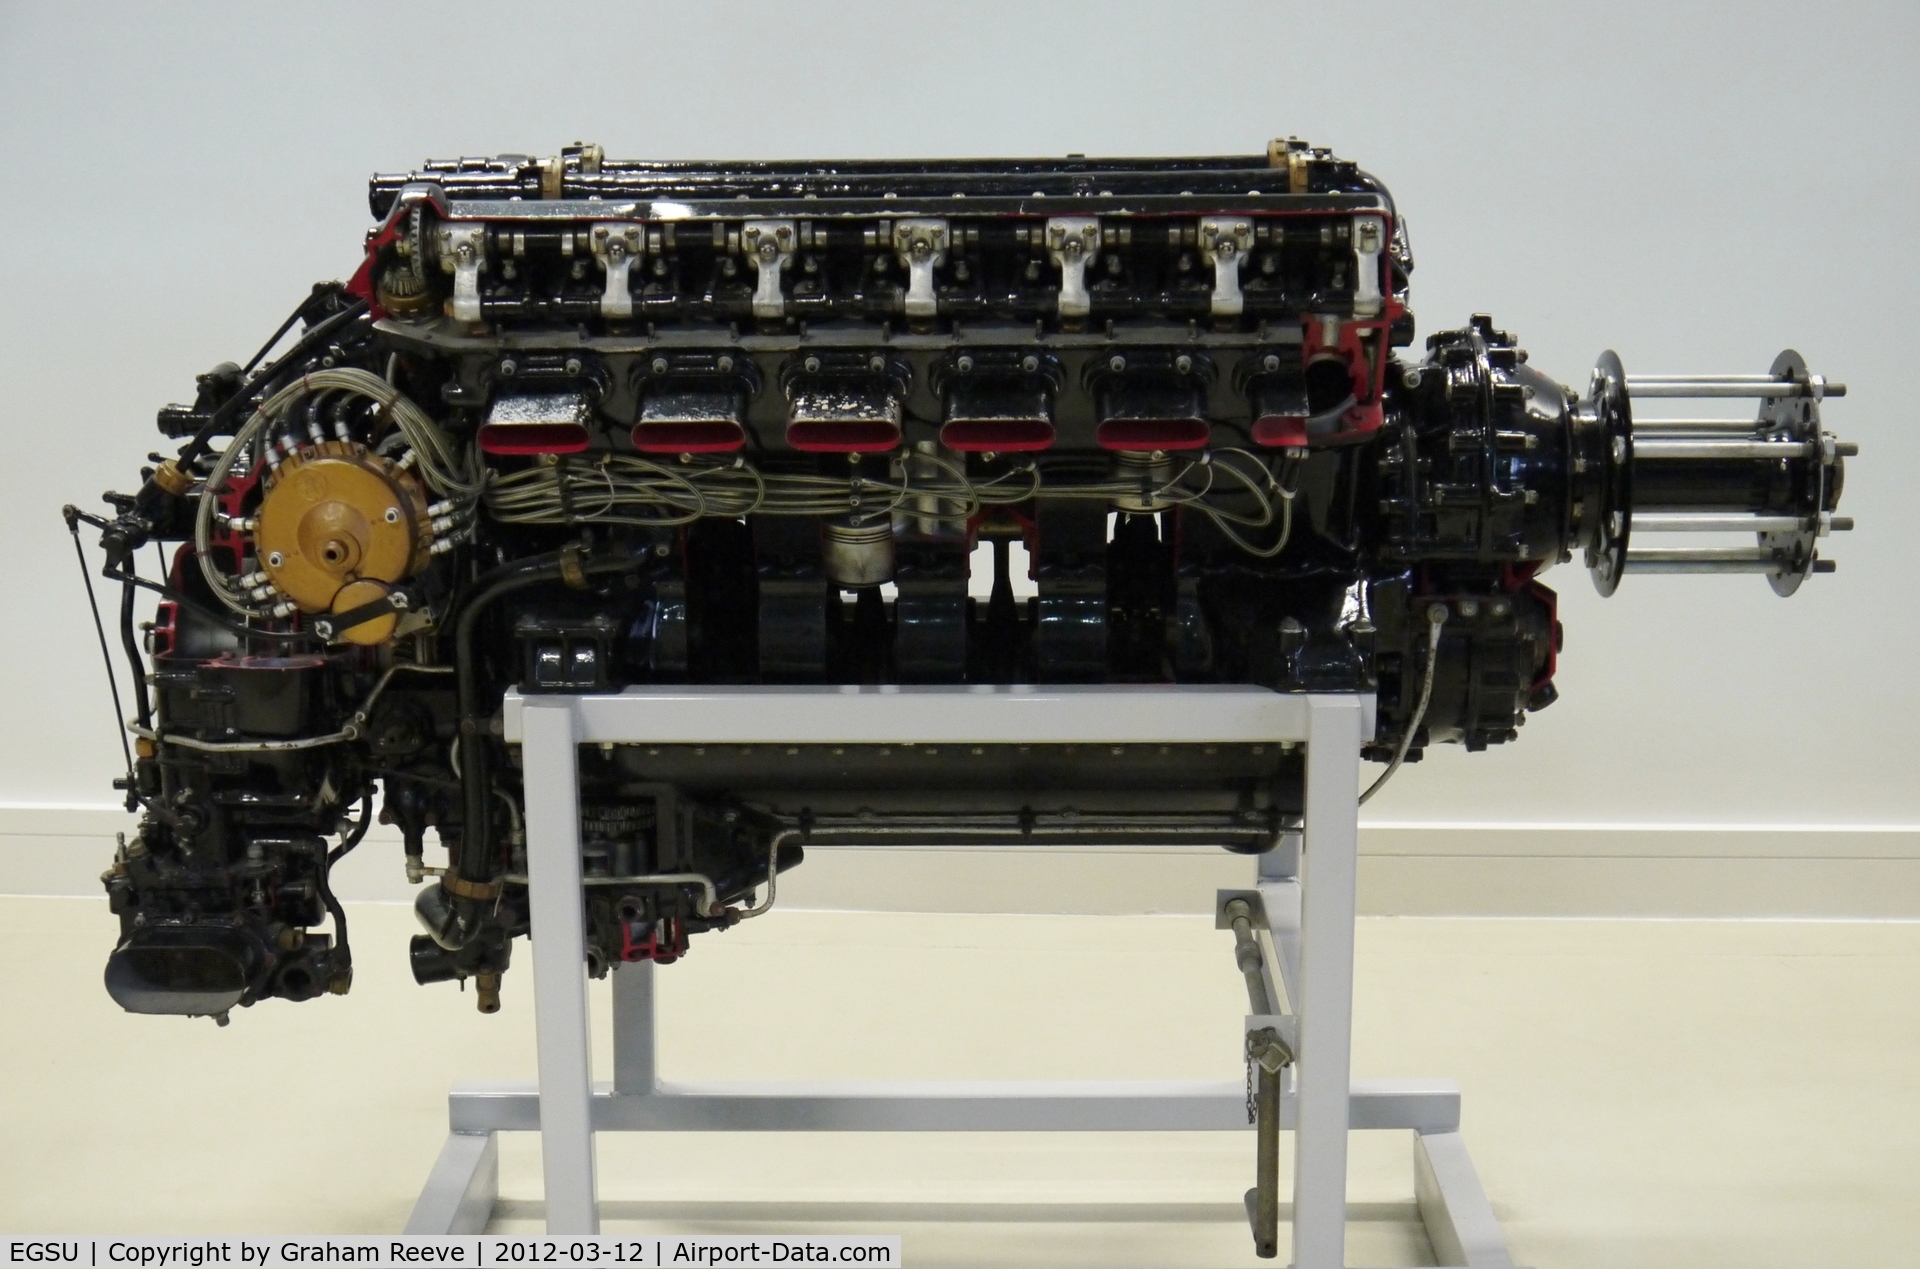 Duxford Airport, Cambridge, England United Kingdom (EGSU) - Rolls-Royce Kestrel engine on displat at Duxford.